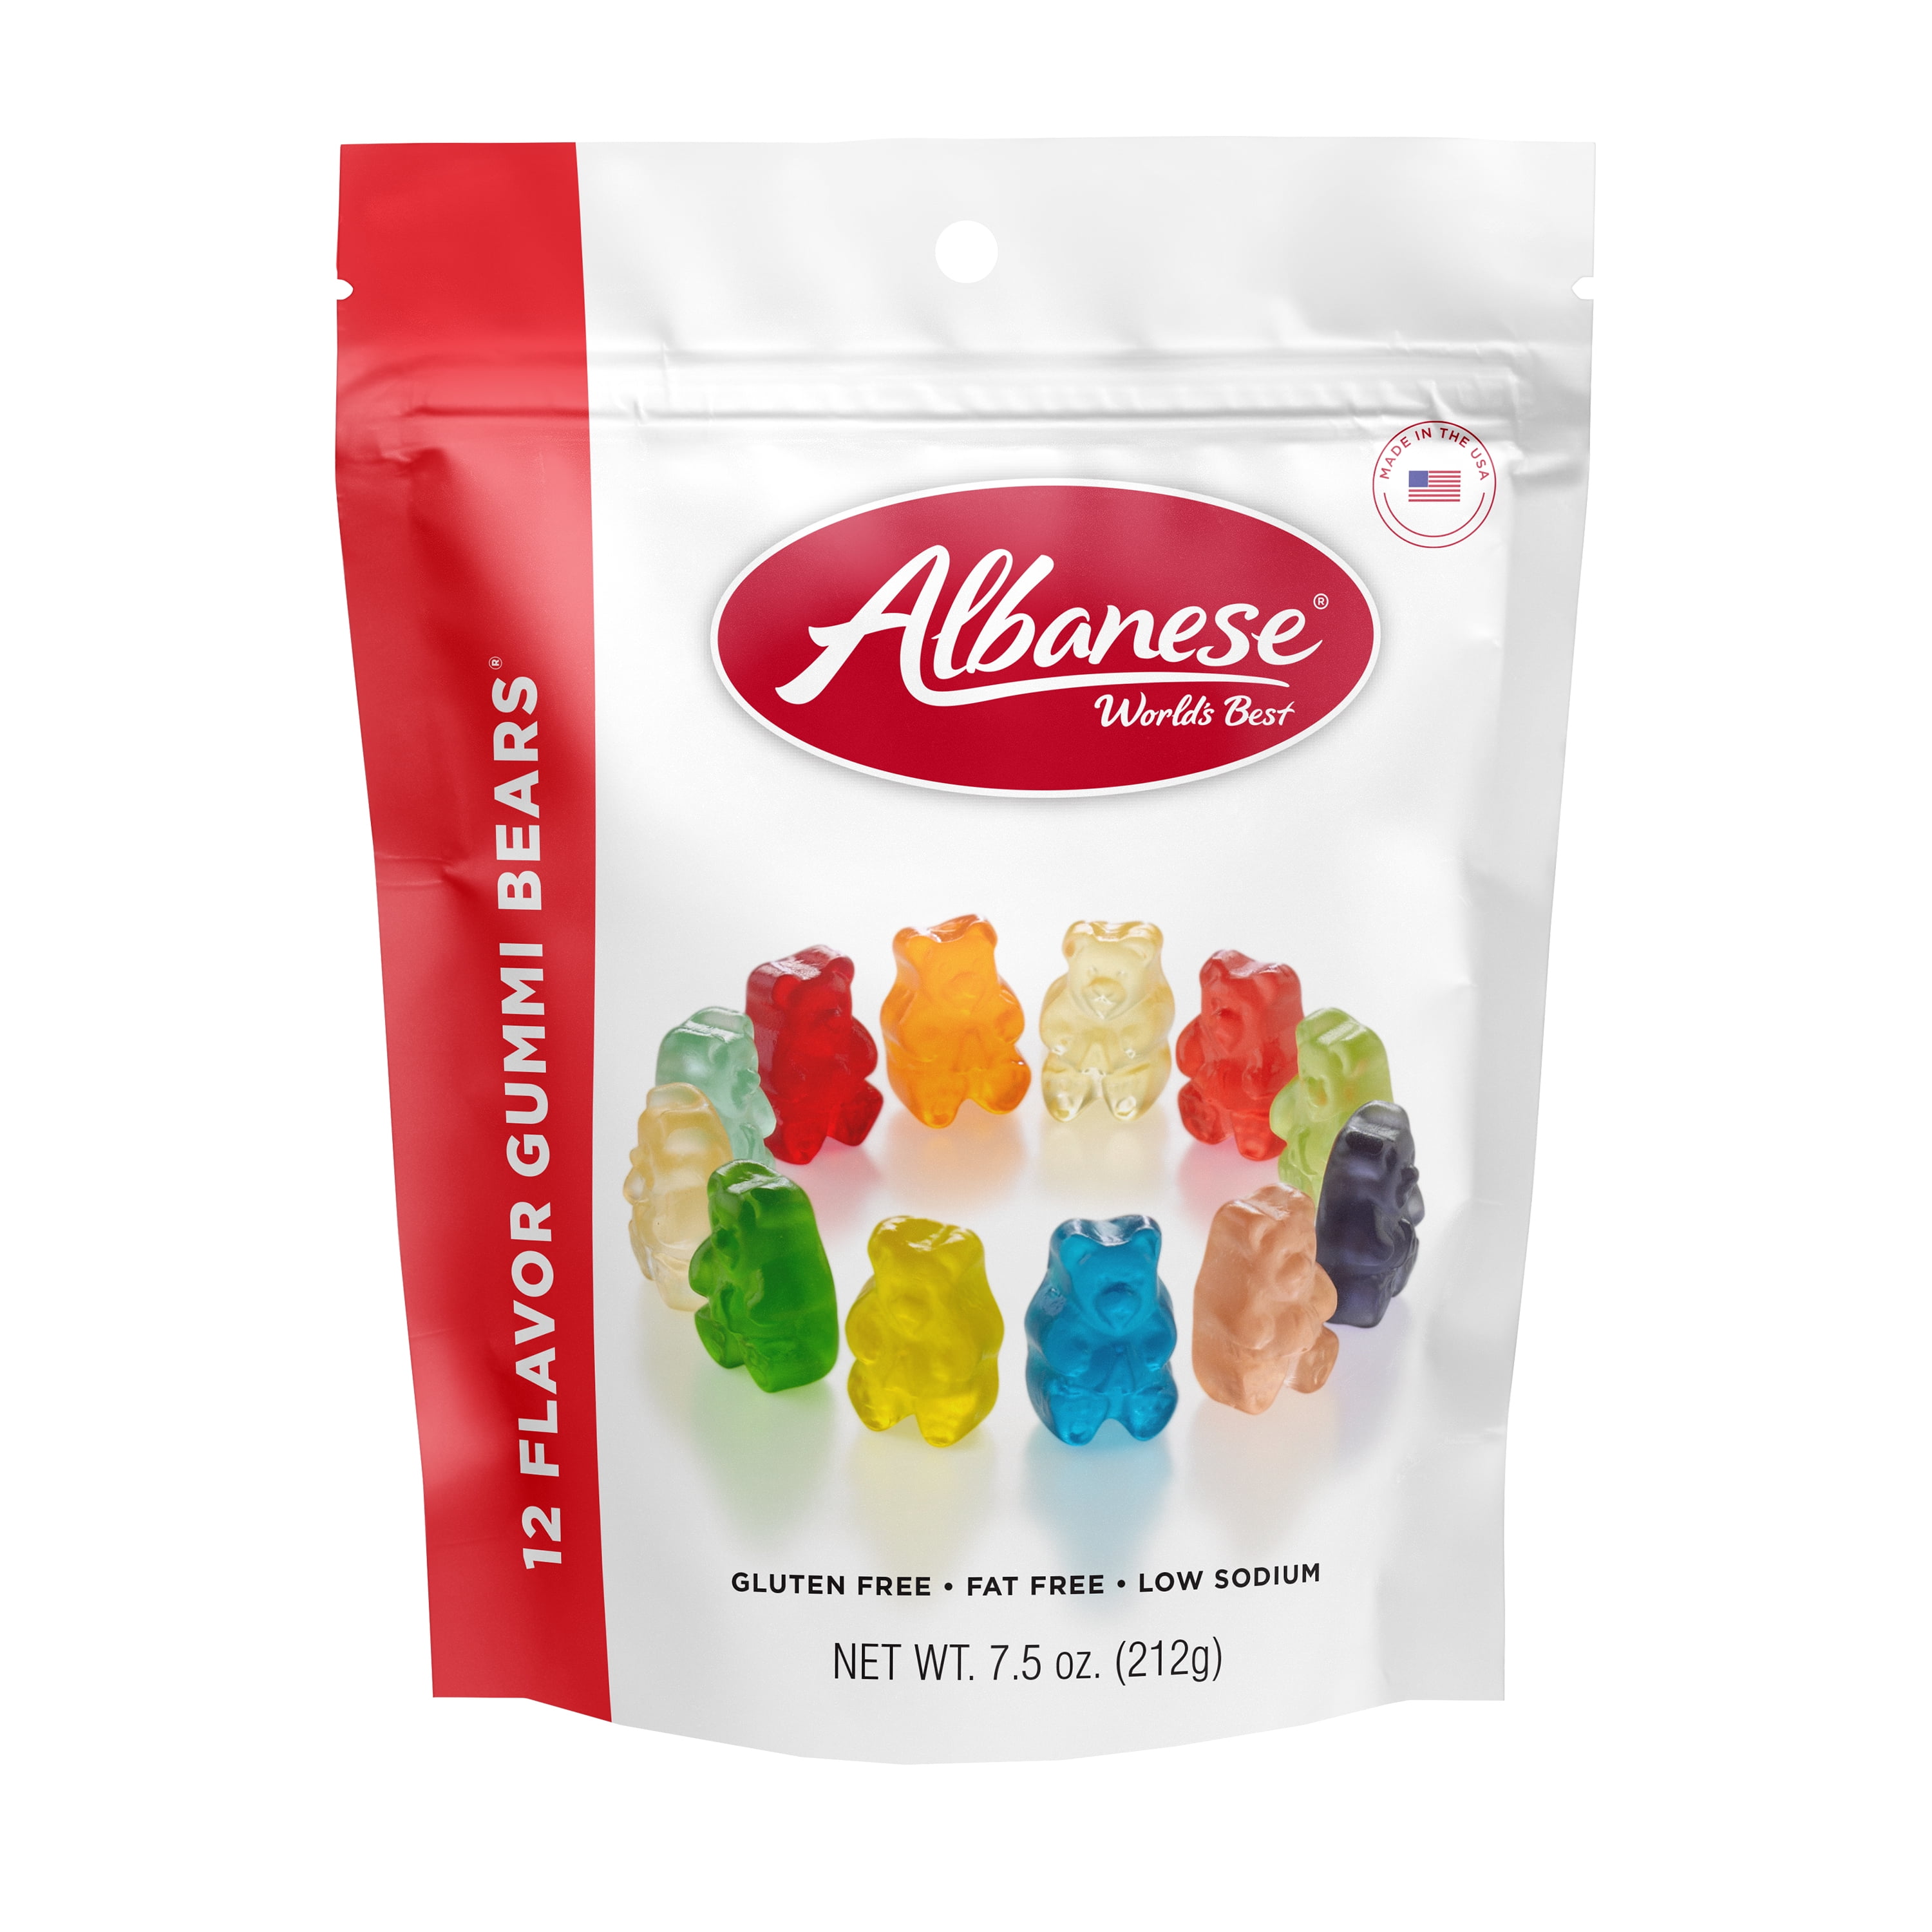 Albanese Worlds Best 12 Flavor Gummi Bears, 7.5oz